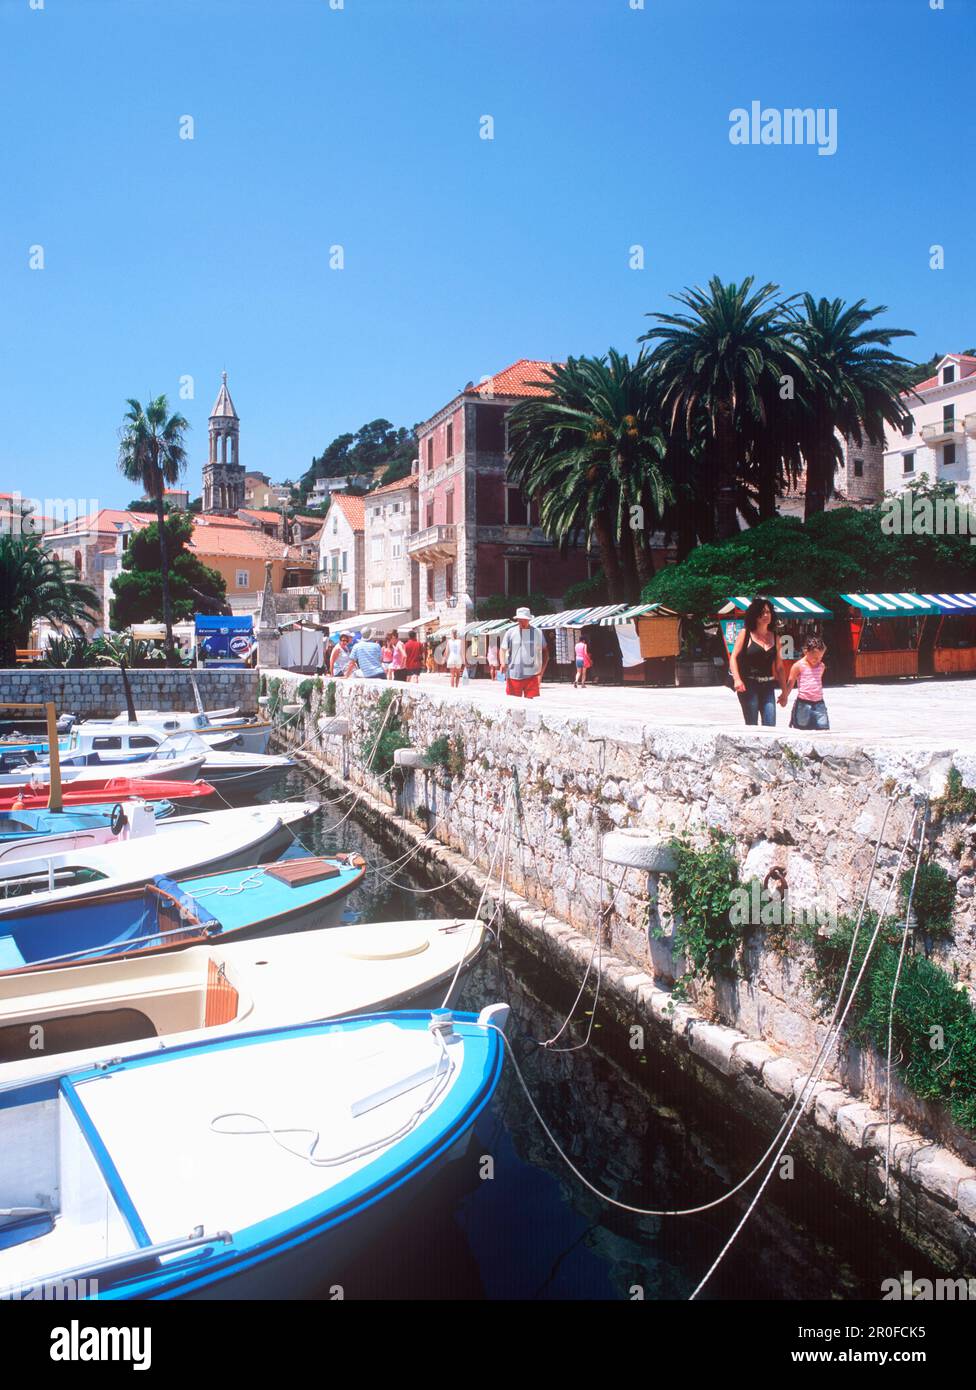 Boats in the harbor of Hvar, Hvar, Dalmatia, Croatia Stock Photo - Alamy